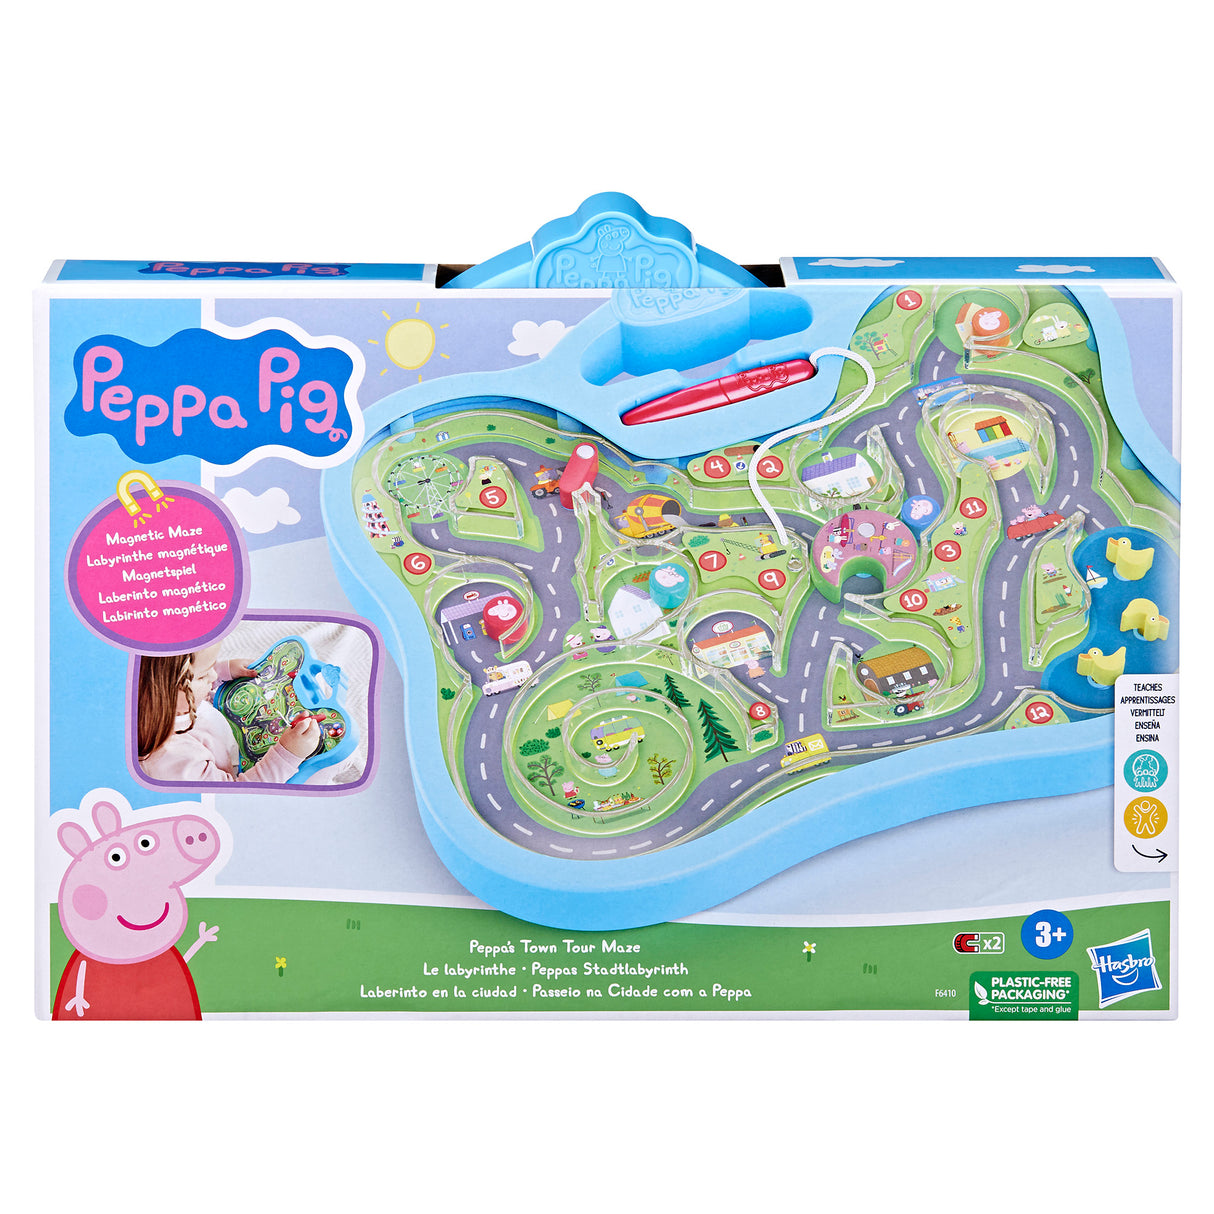 Peppa Pig Peppas Town Tour Maze Playset